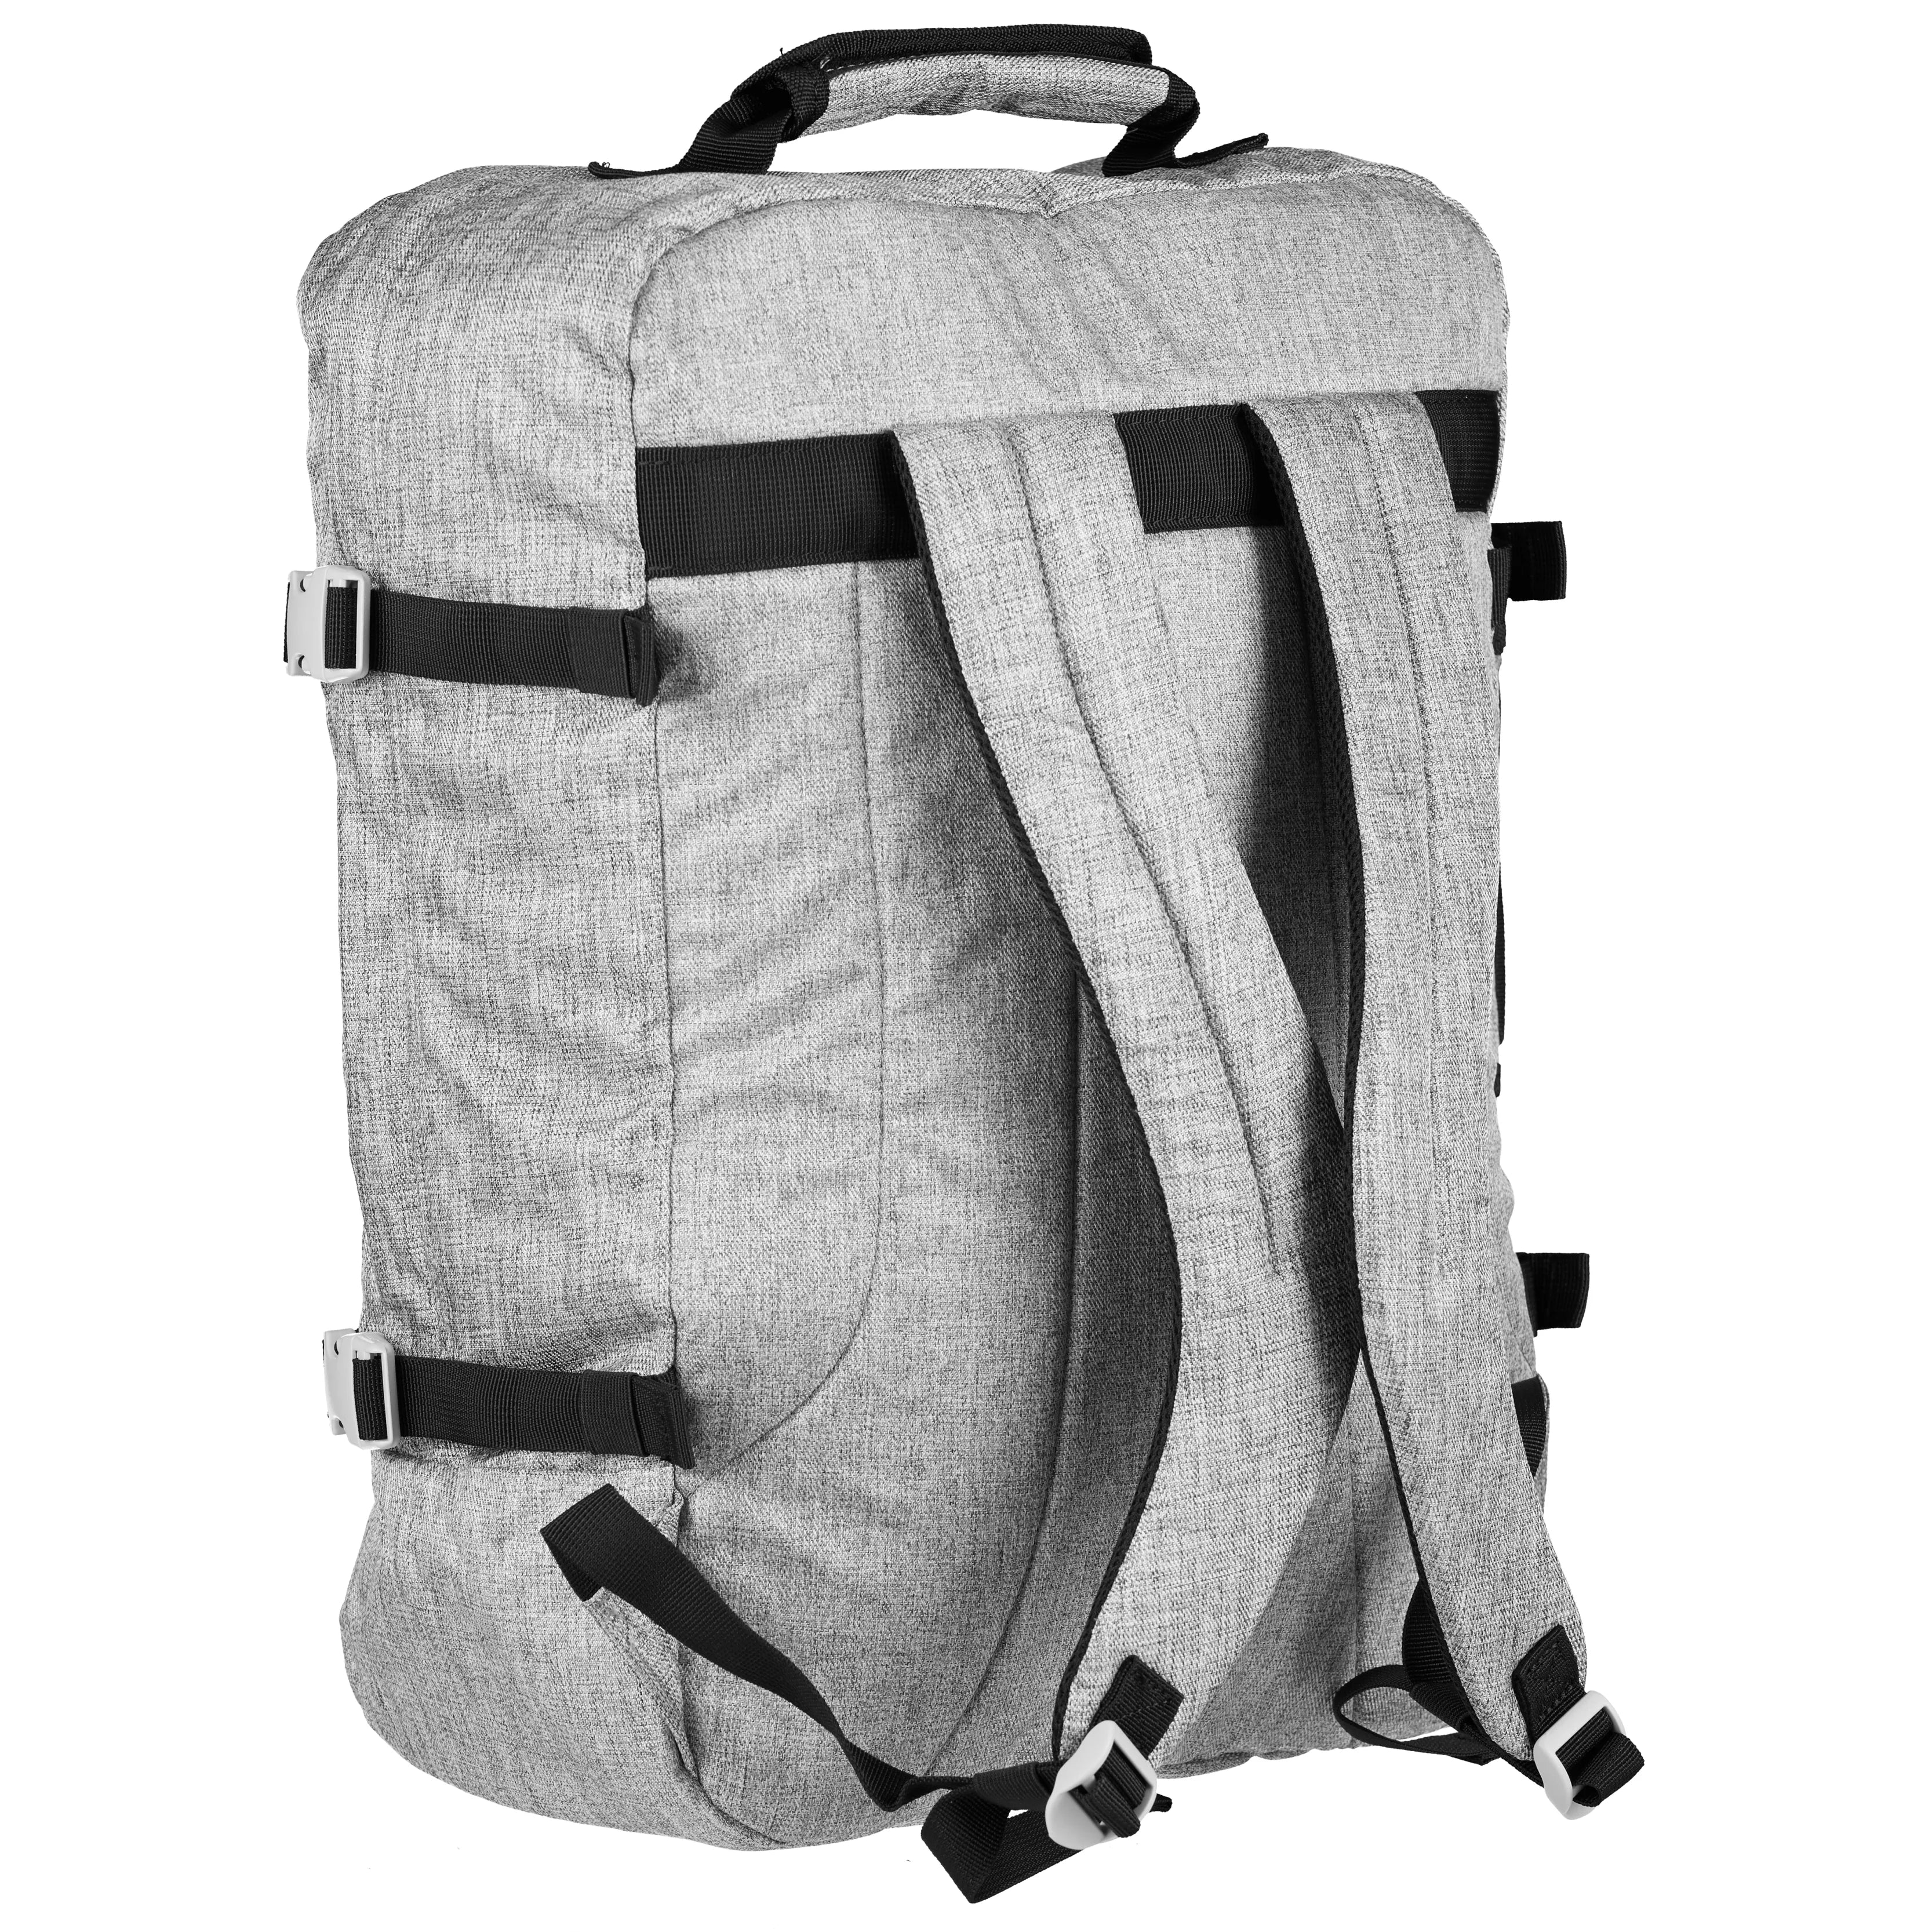 CabinZero Cabin Backpacks Classic 44L Backpack 51 cm - Deep Ocean